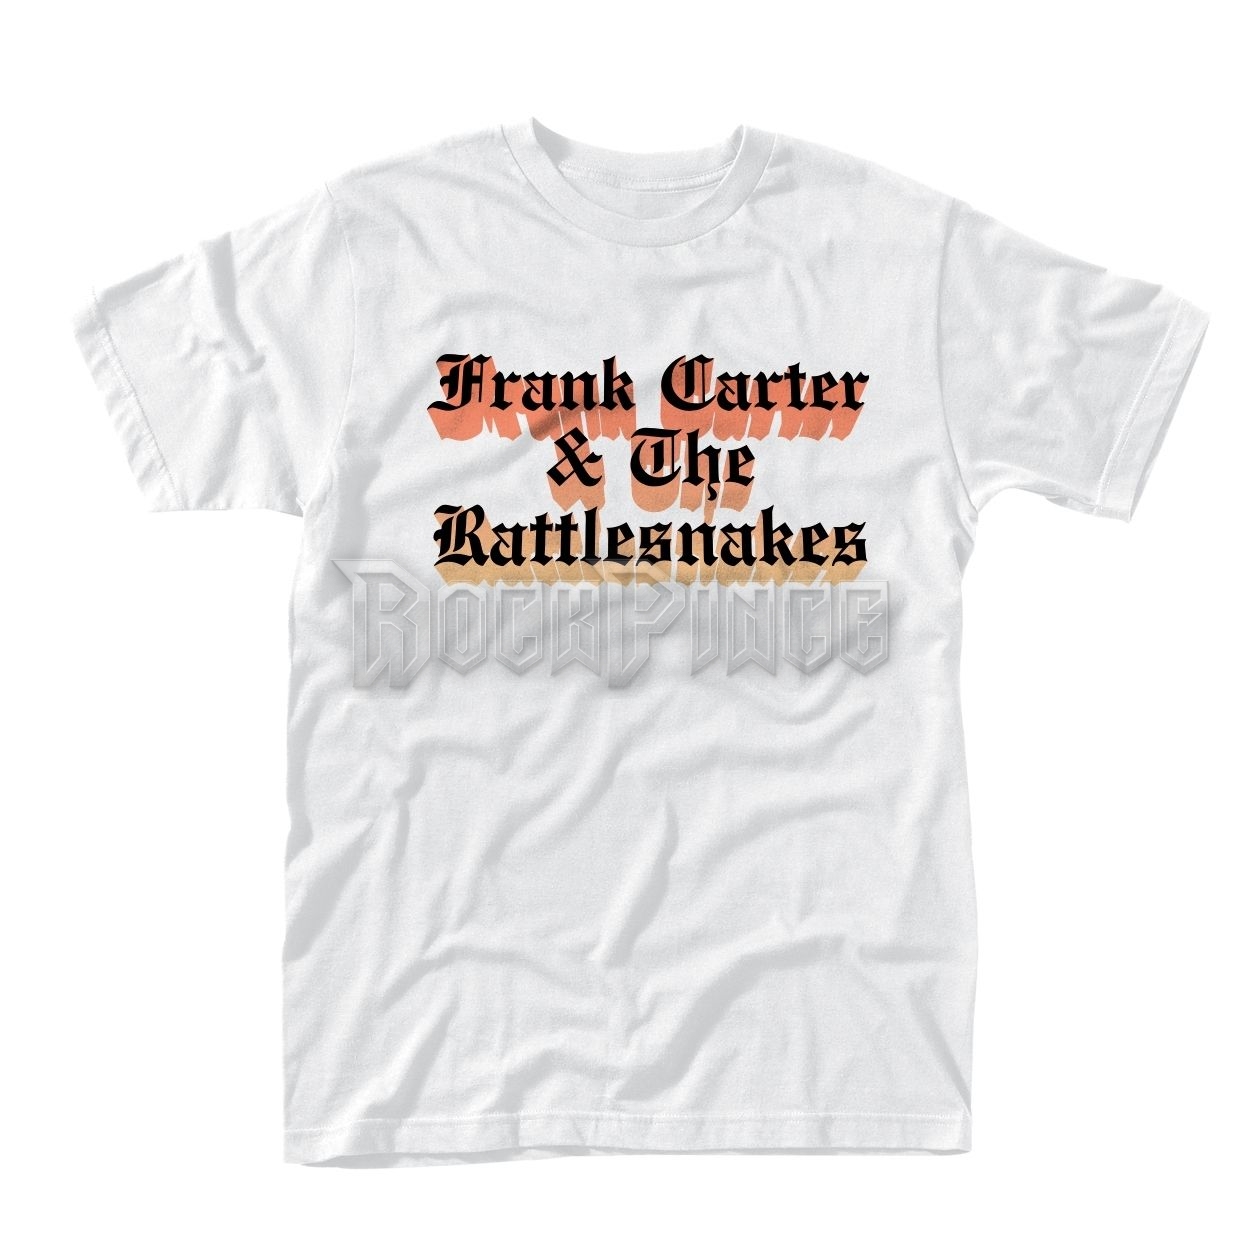 FRANK CARTER & THE RATTLESNAKES - GRADIENT (WHITE) - Unisex póló - PH10051